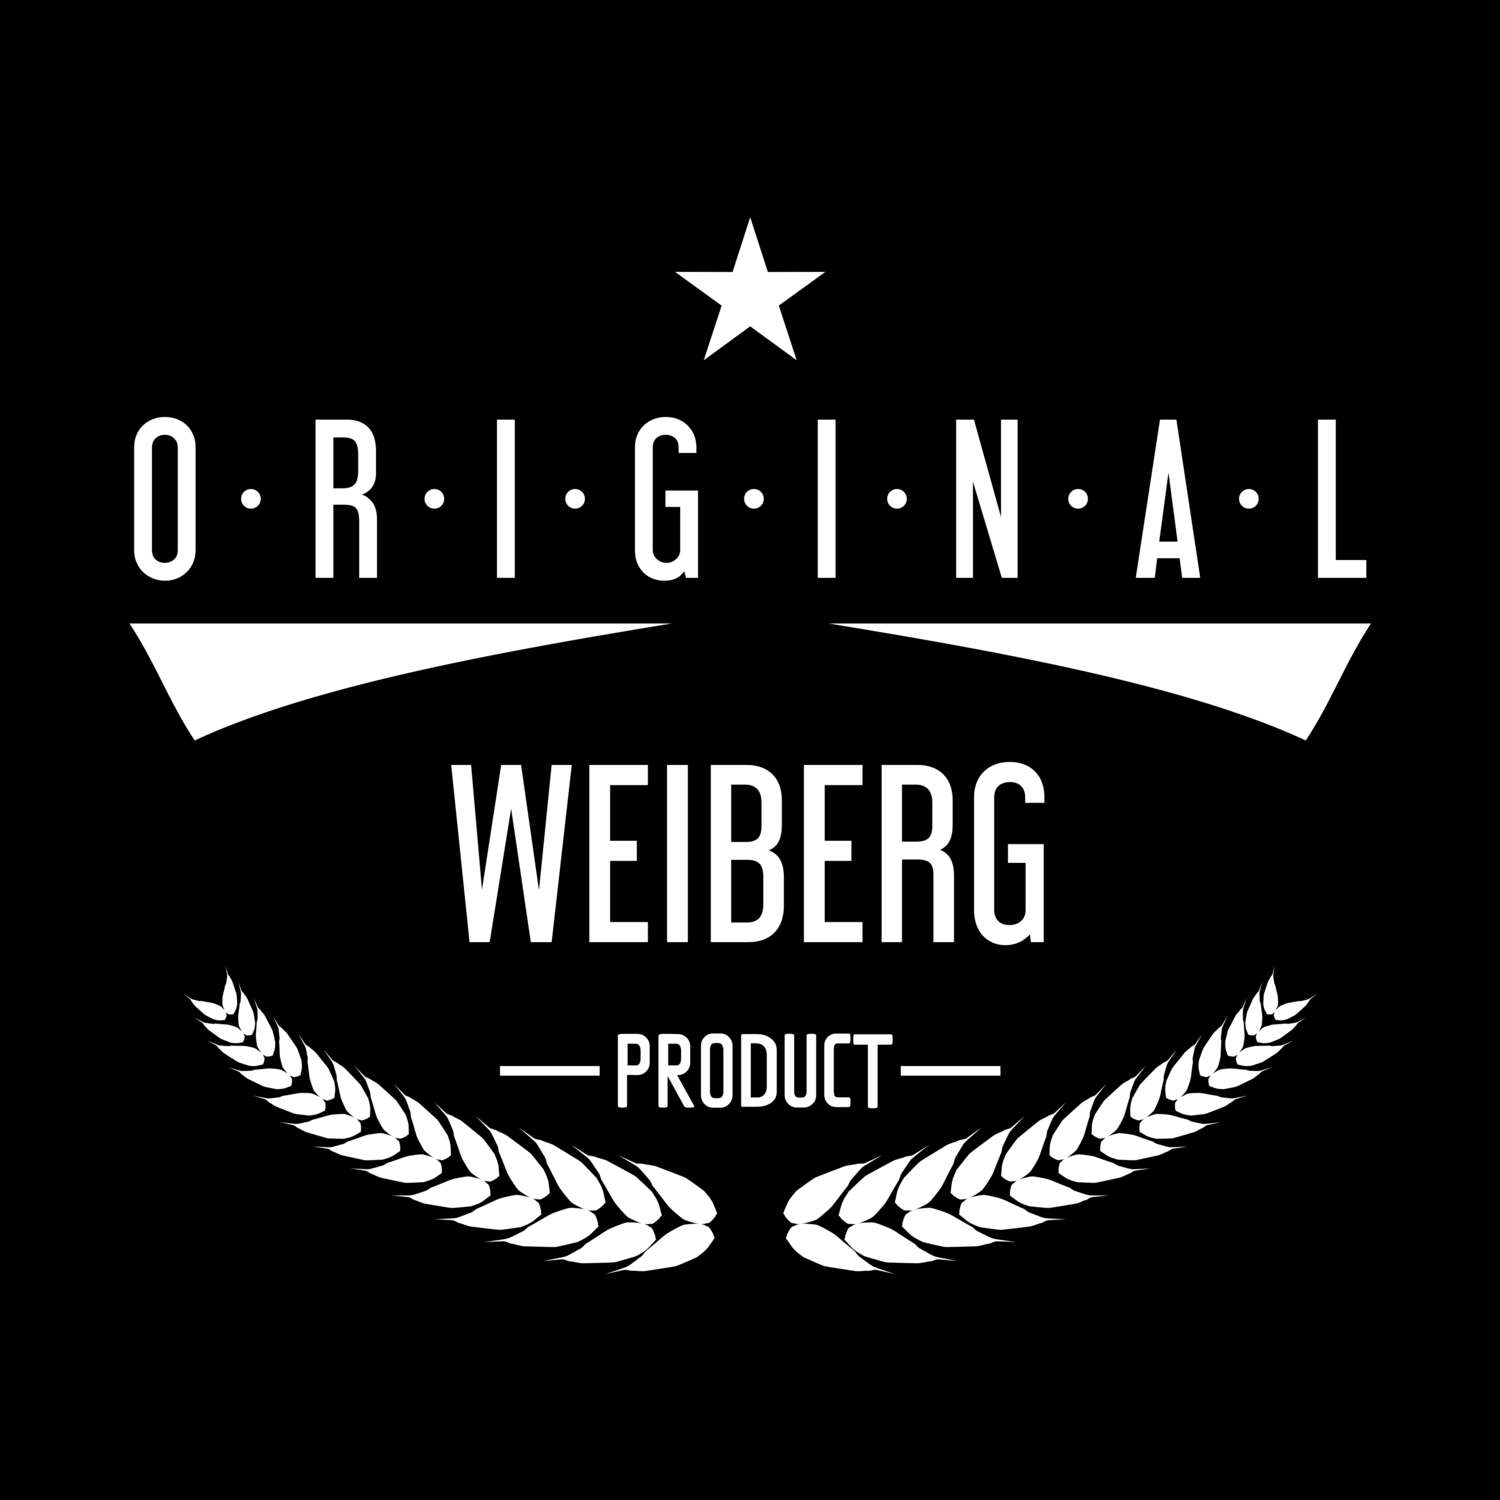 Weiberg T-Shirt »Original Product«